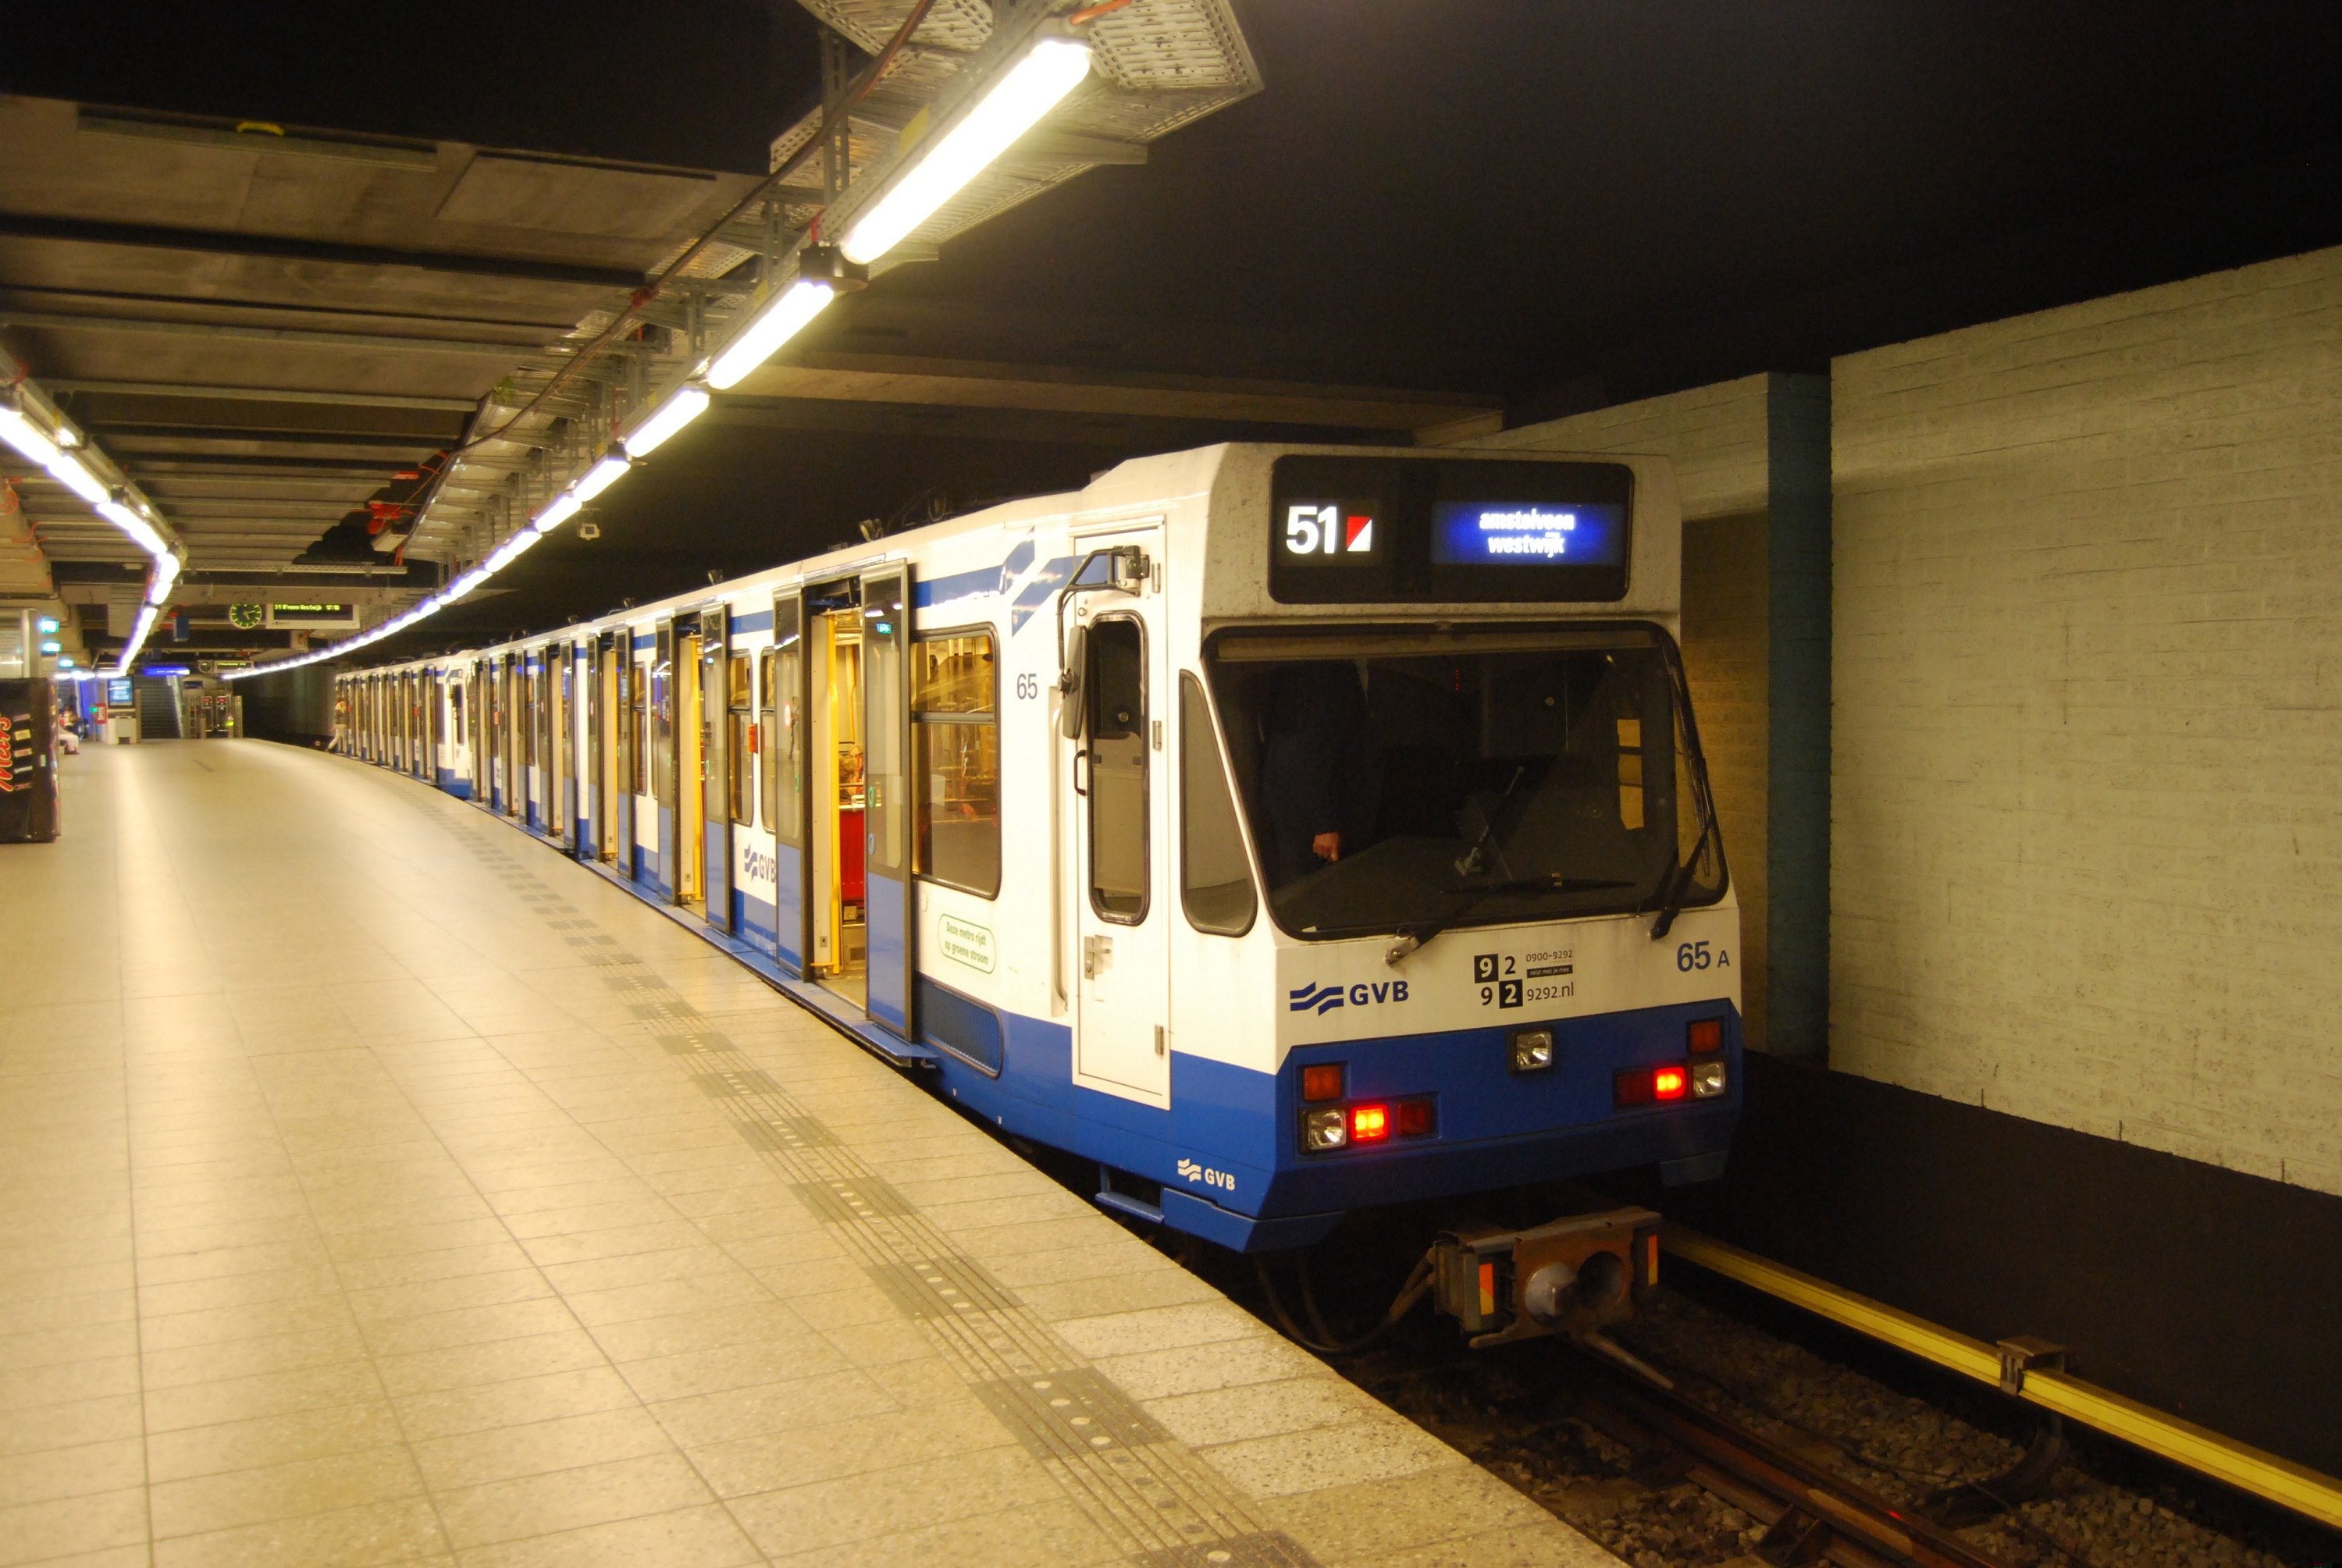 M51 Amstelveen Westwijk Centraal Station